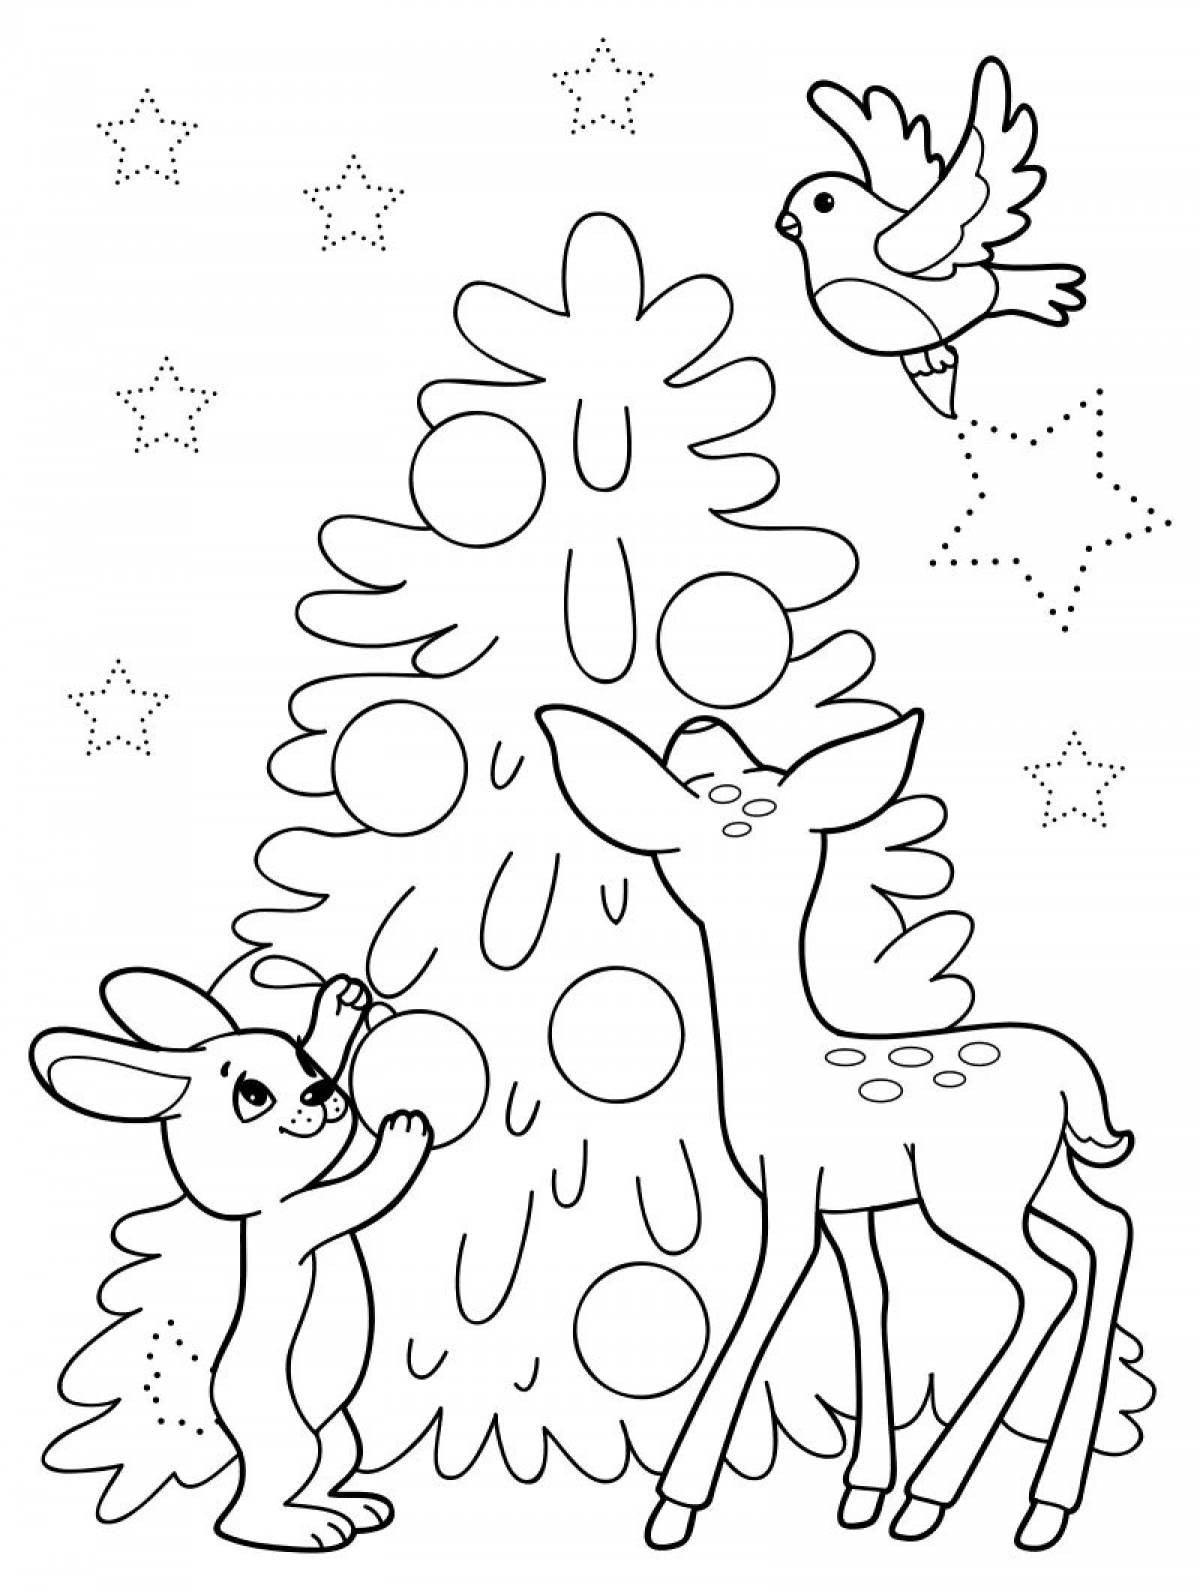 Innovative children's Christmas drawing